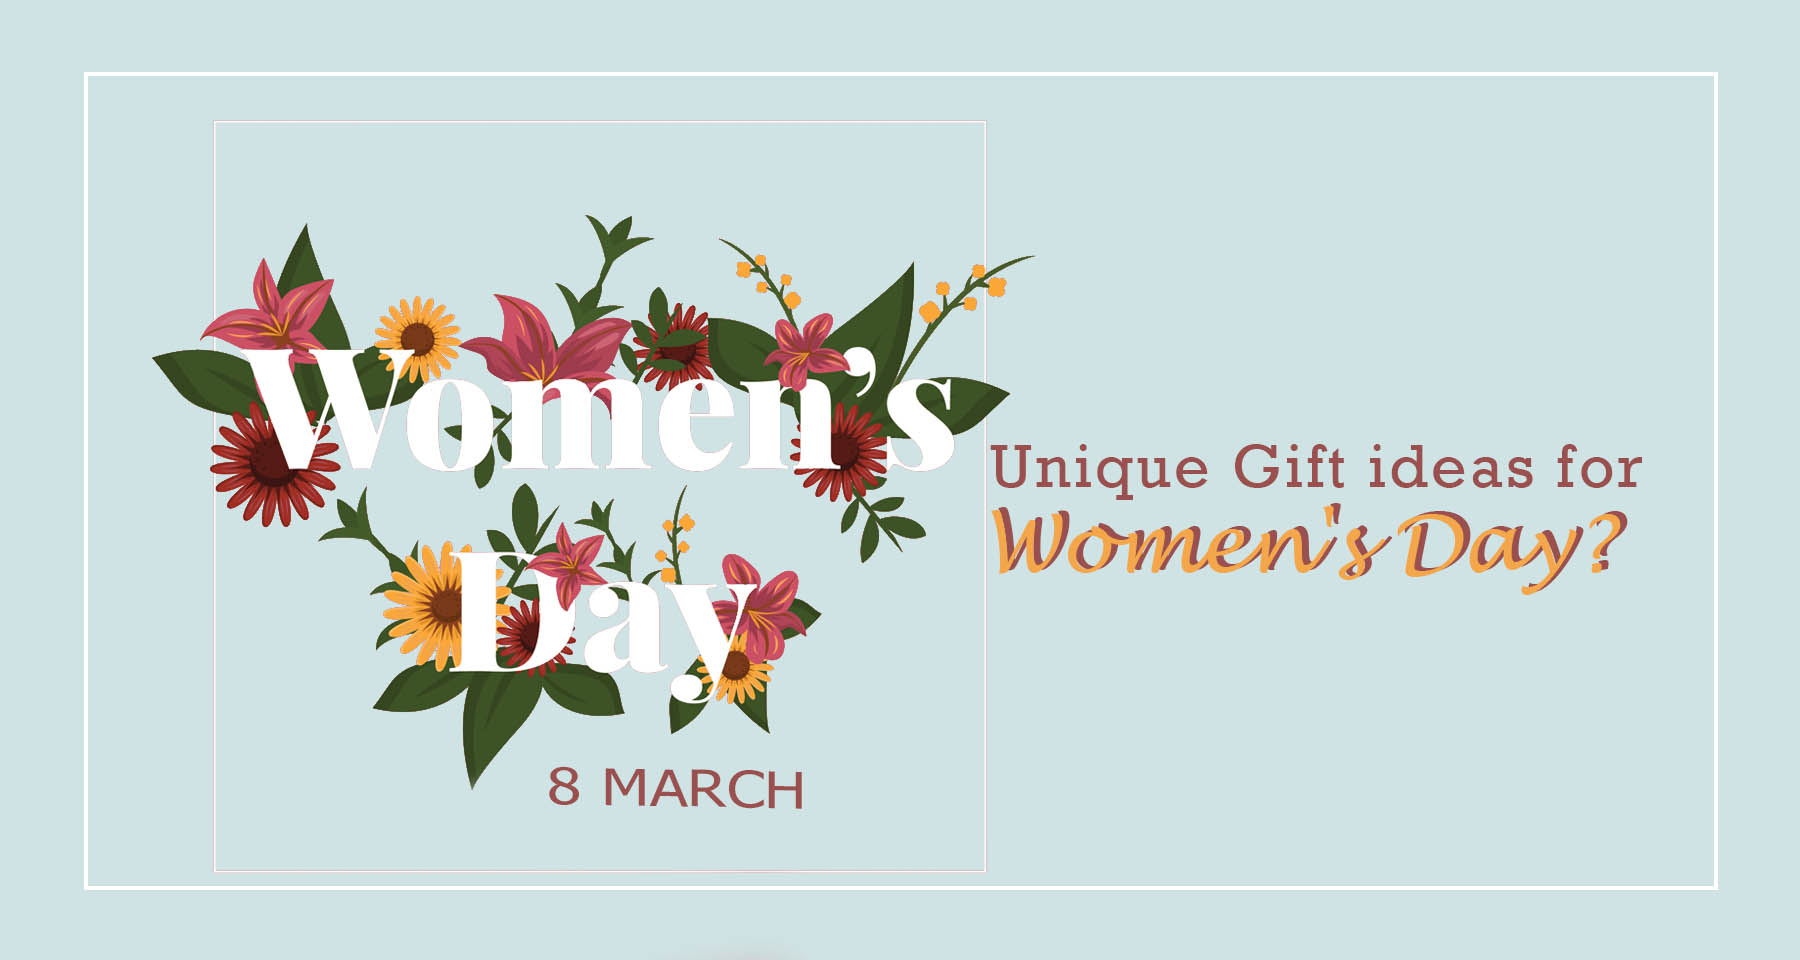 international women's day gift ideas